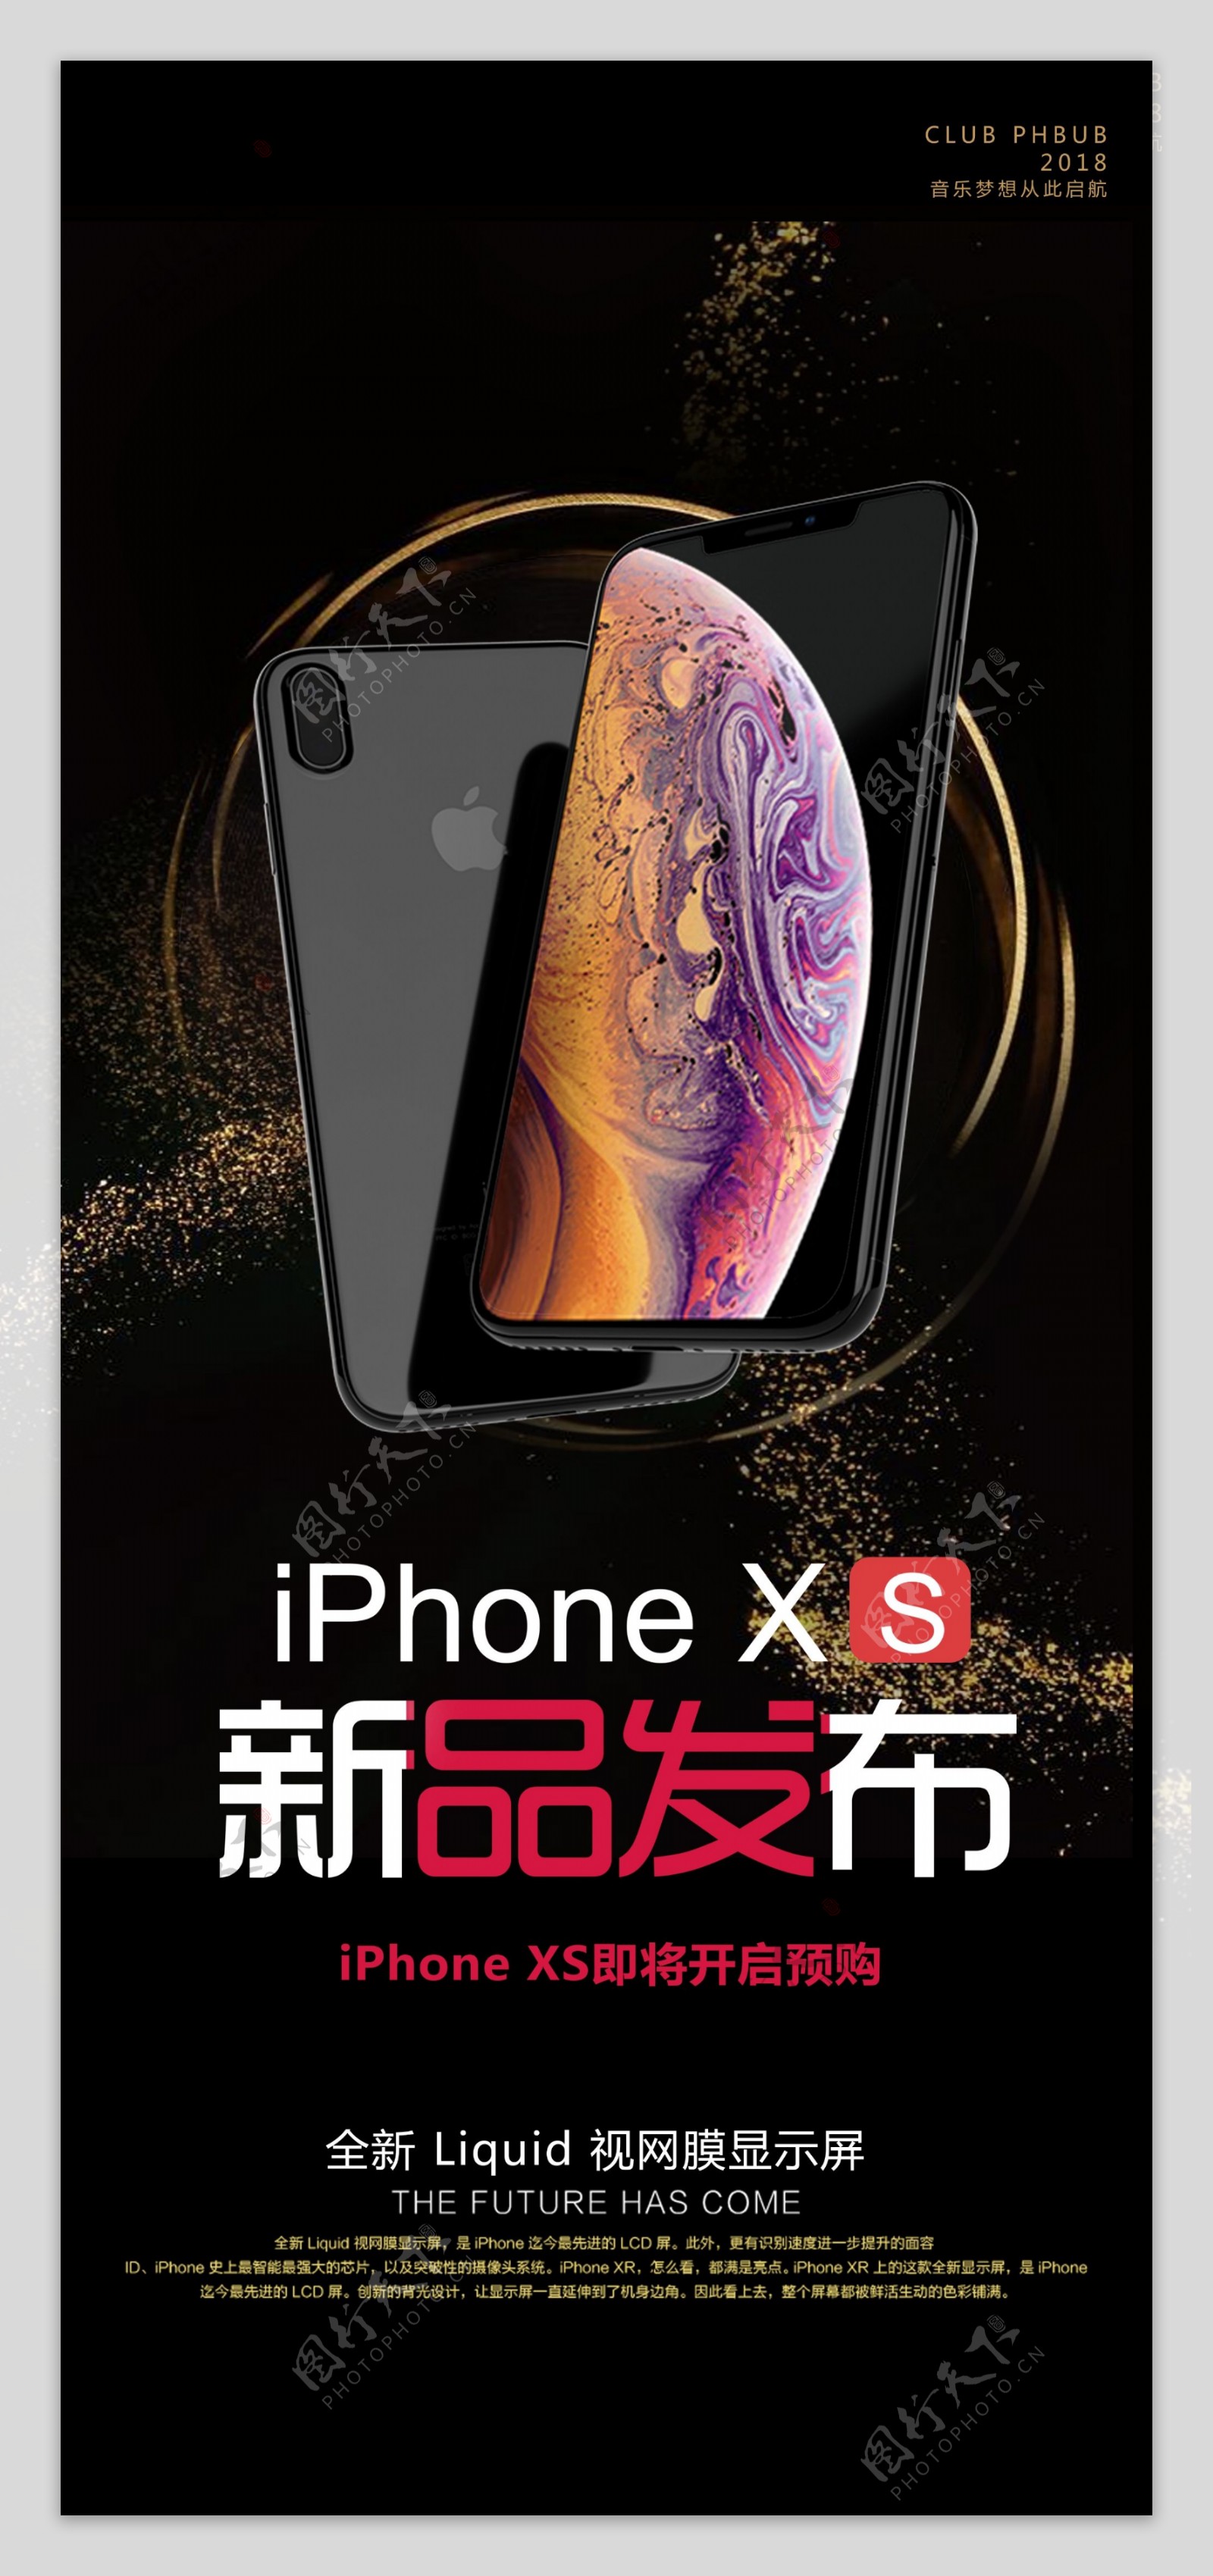 iPhoneX新品预售展架设计